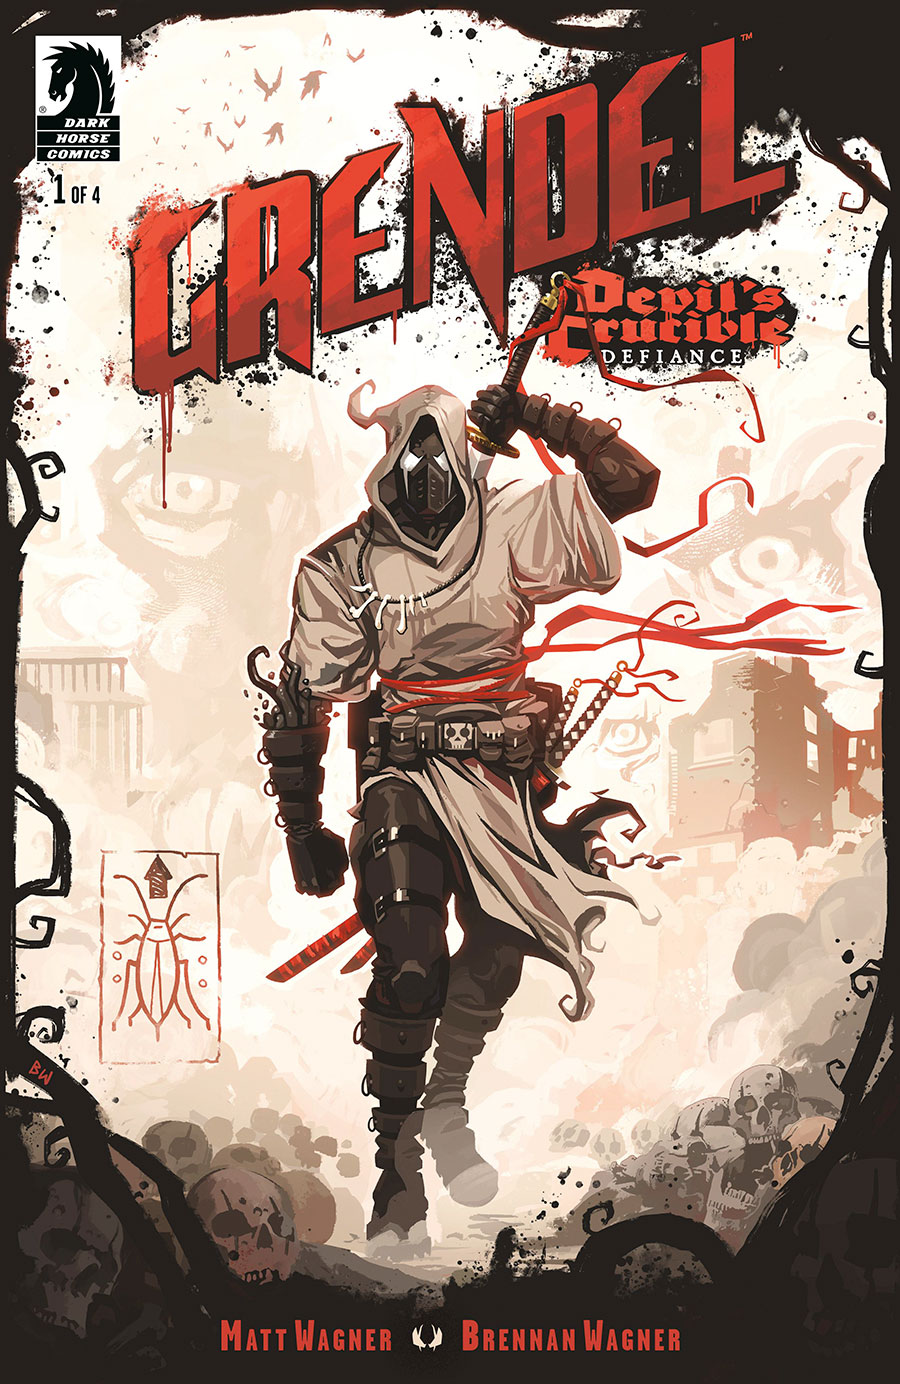 Grendel Devils Crucible Defiance #1 Cover B Variant Brennan Wagner Cover